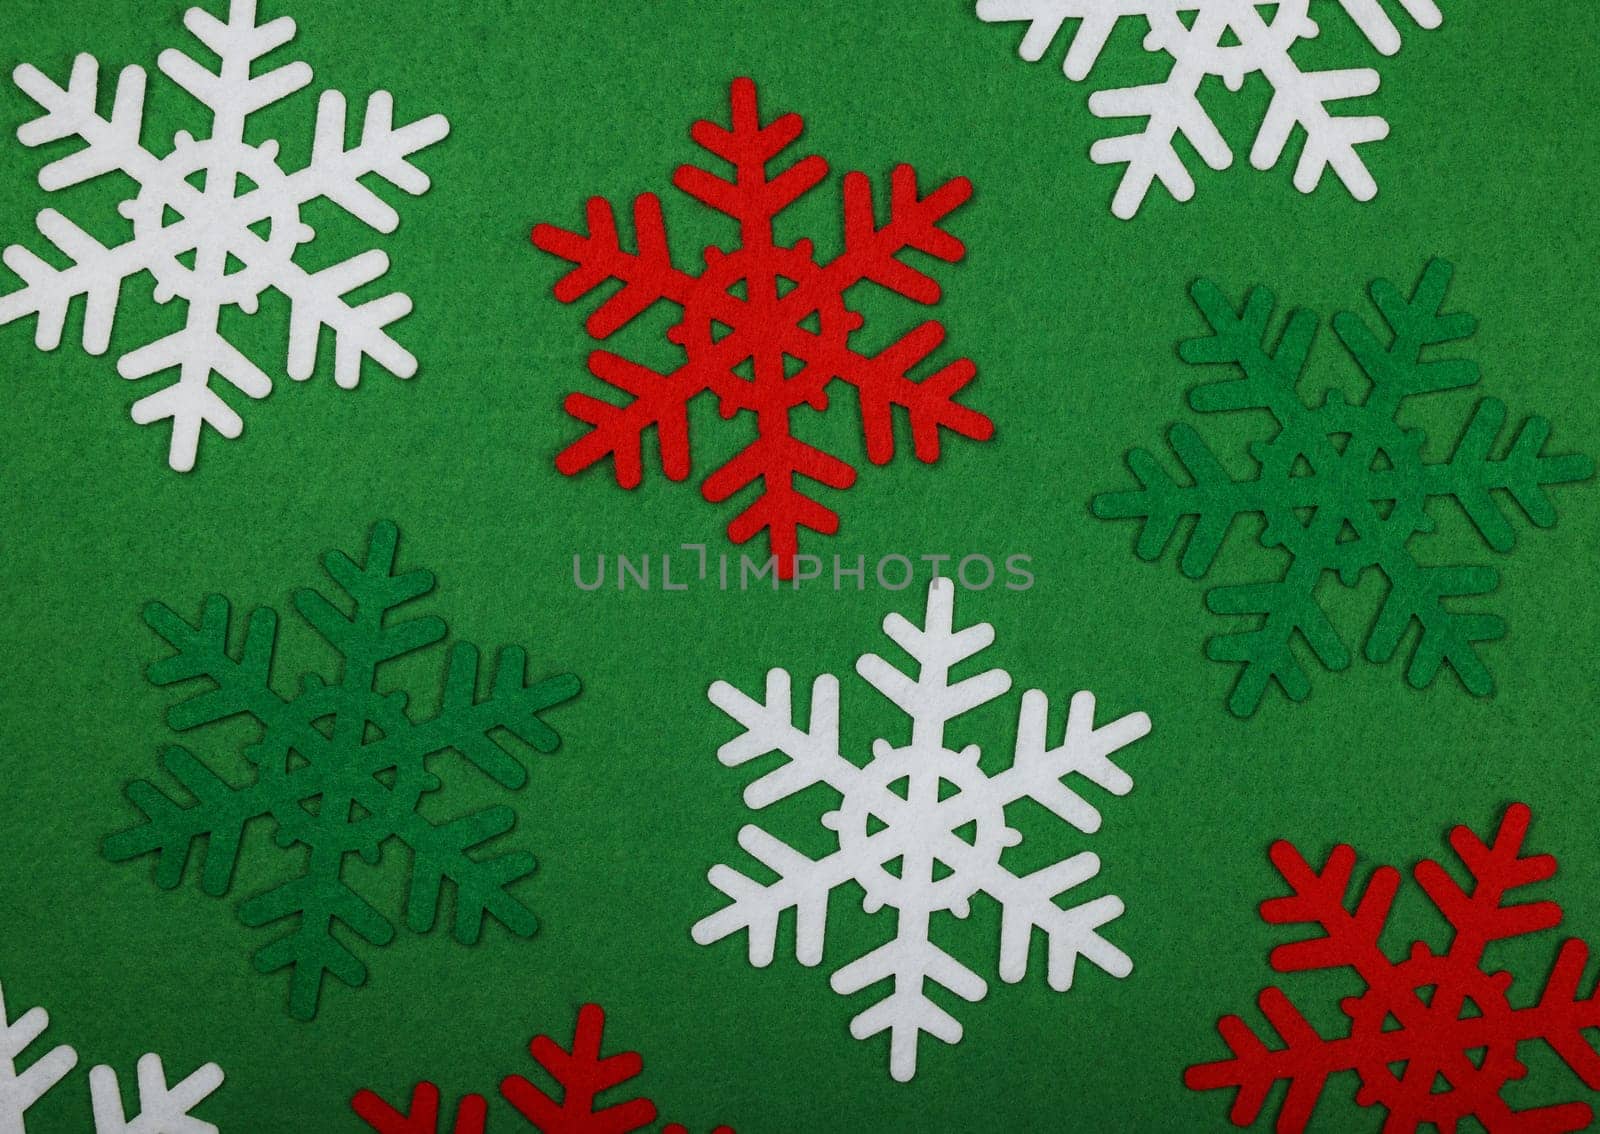 Felt snowflakes Christmas decoration by BreakingTheWalls